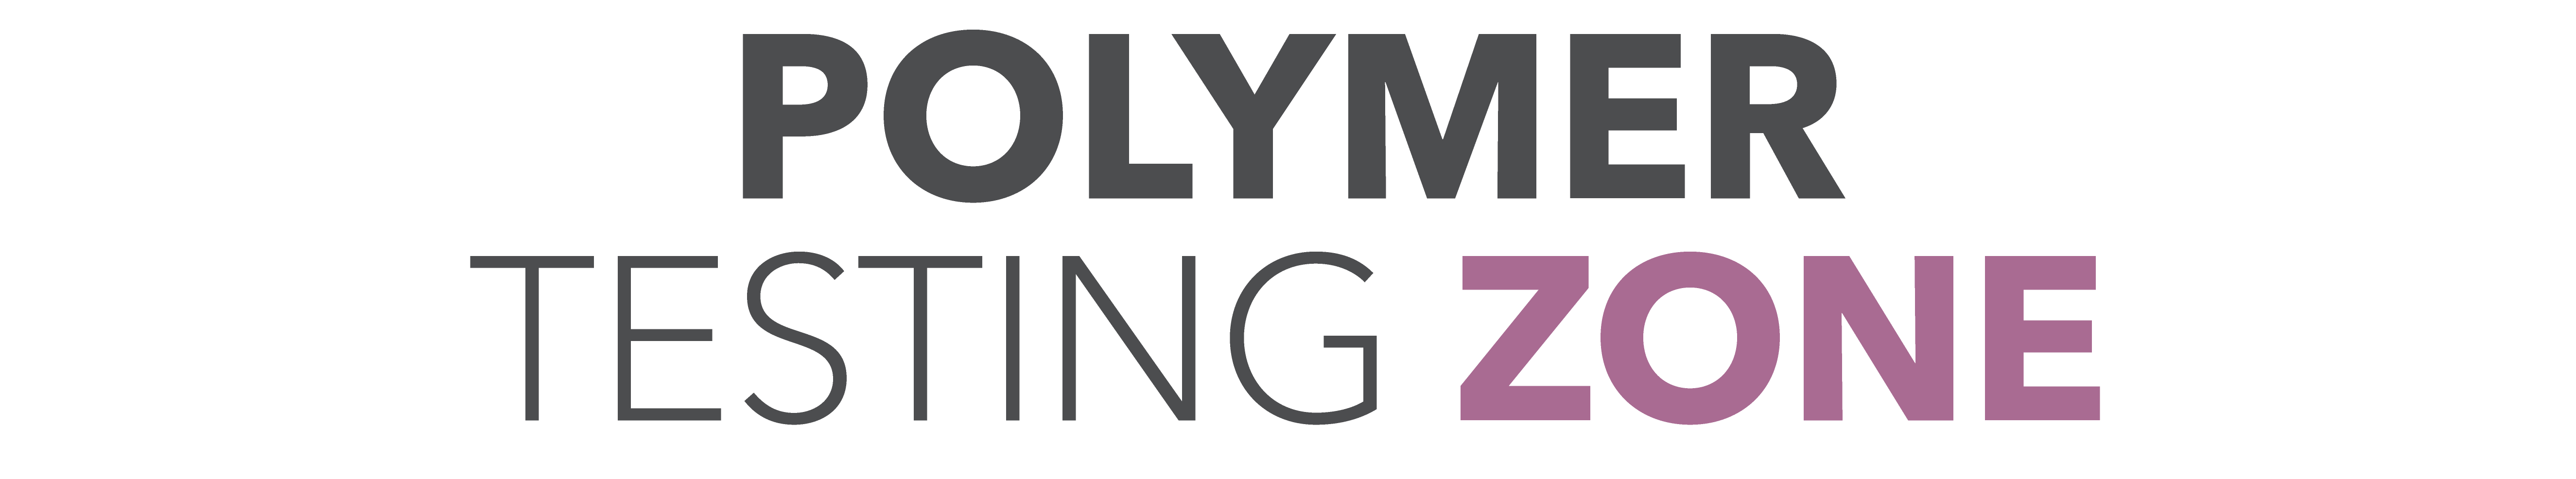 Polymer Testing Zone